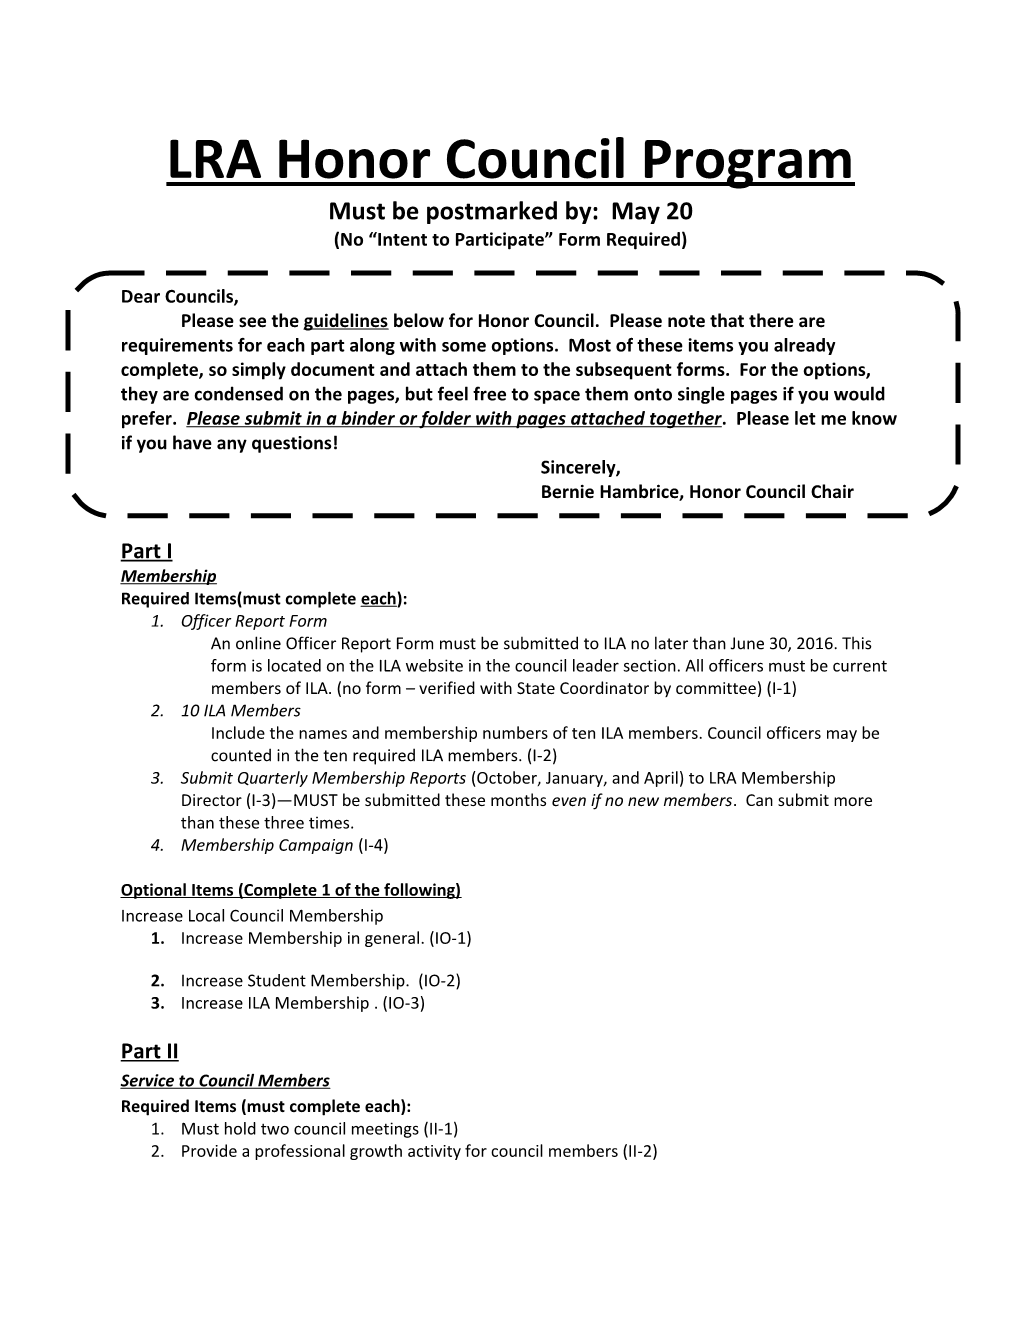 LRA Honor Council Program